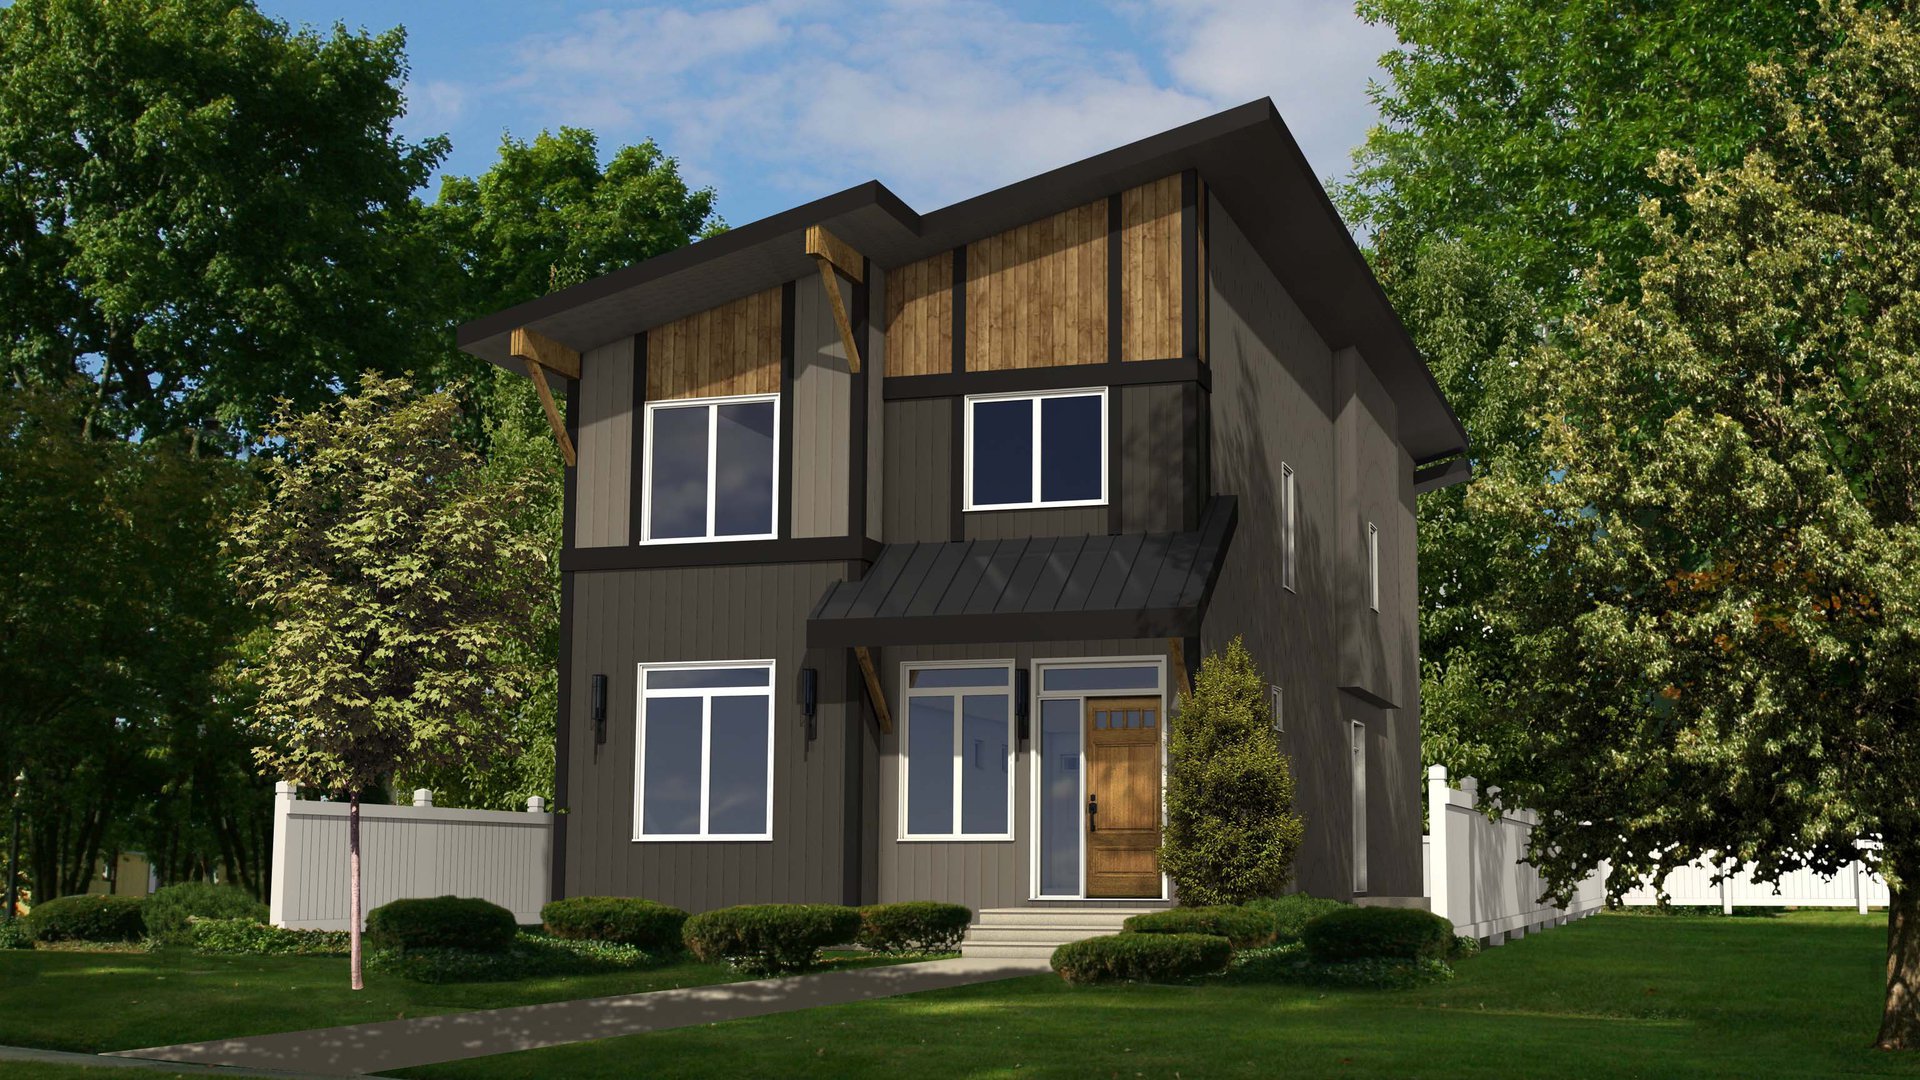 Apex prefab home modular home nelson homes USA house plans.jpg